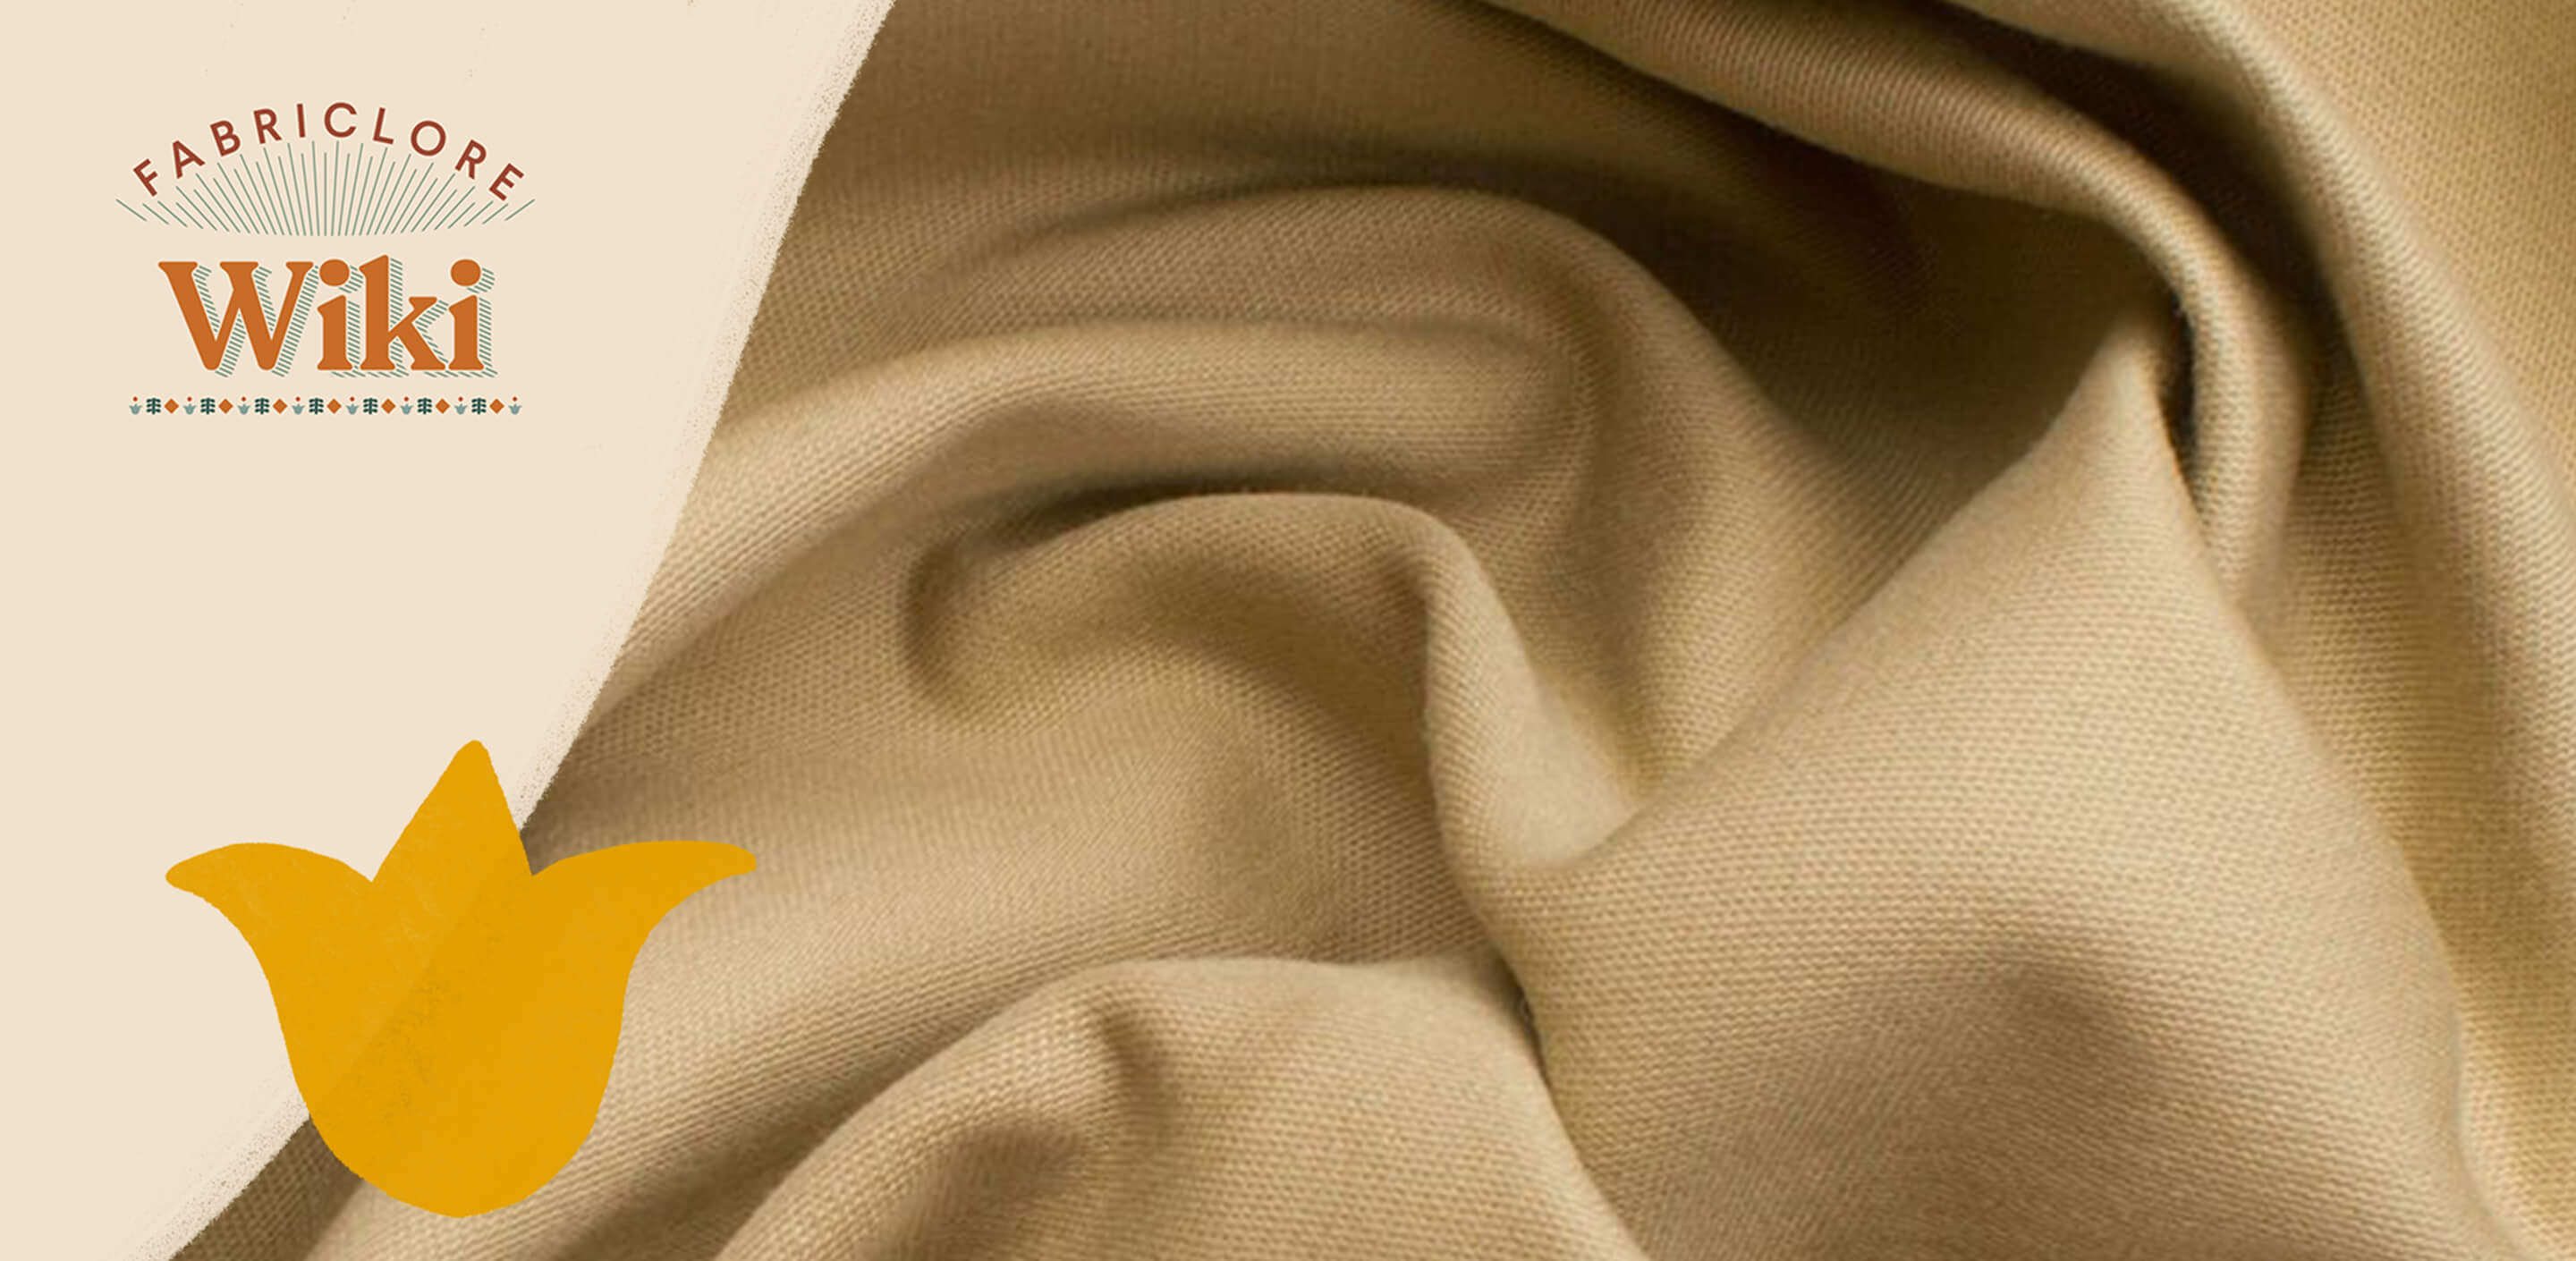 Fleece Fabric - Fabriclore